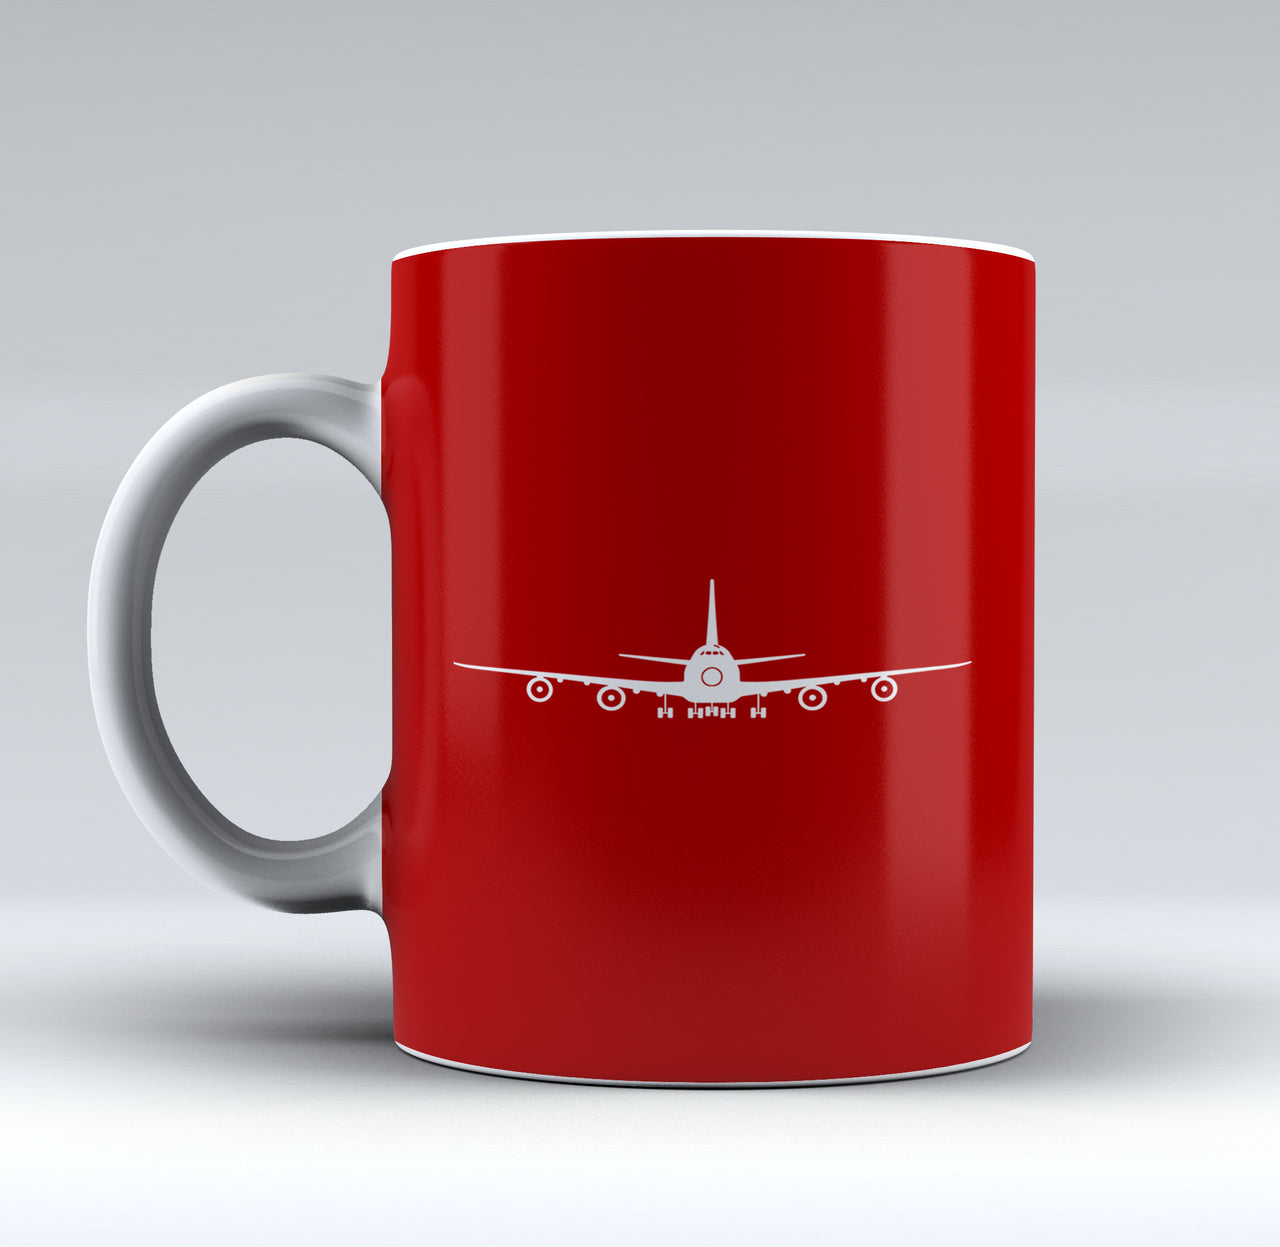 Boeing 747 Silhouette Designed Mugs